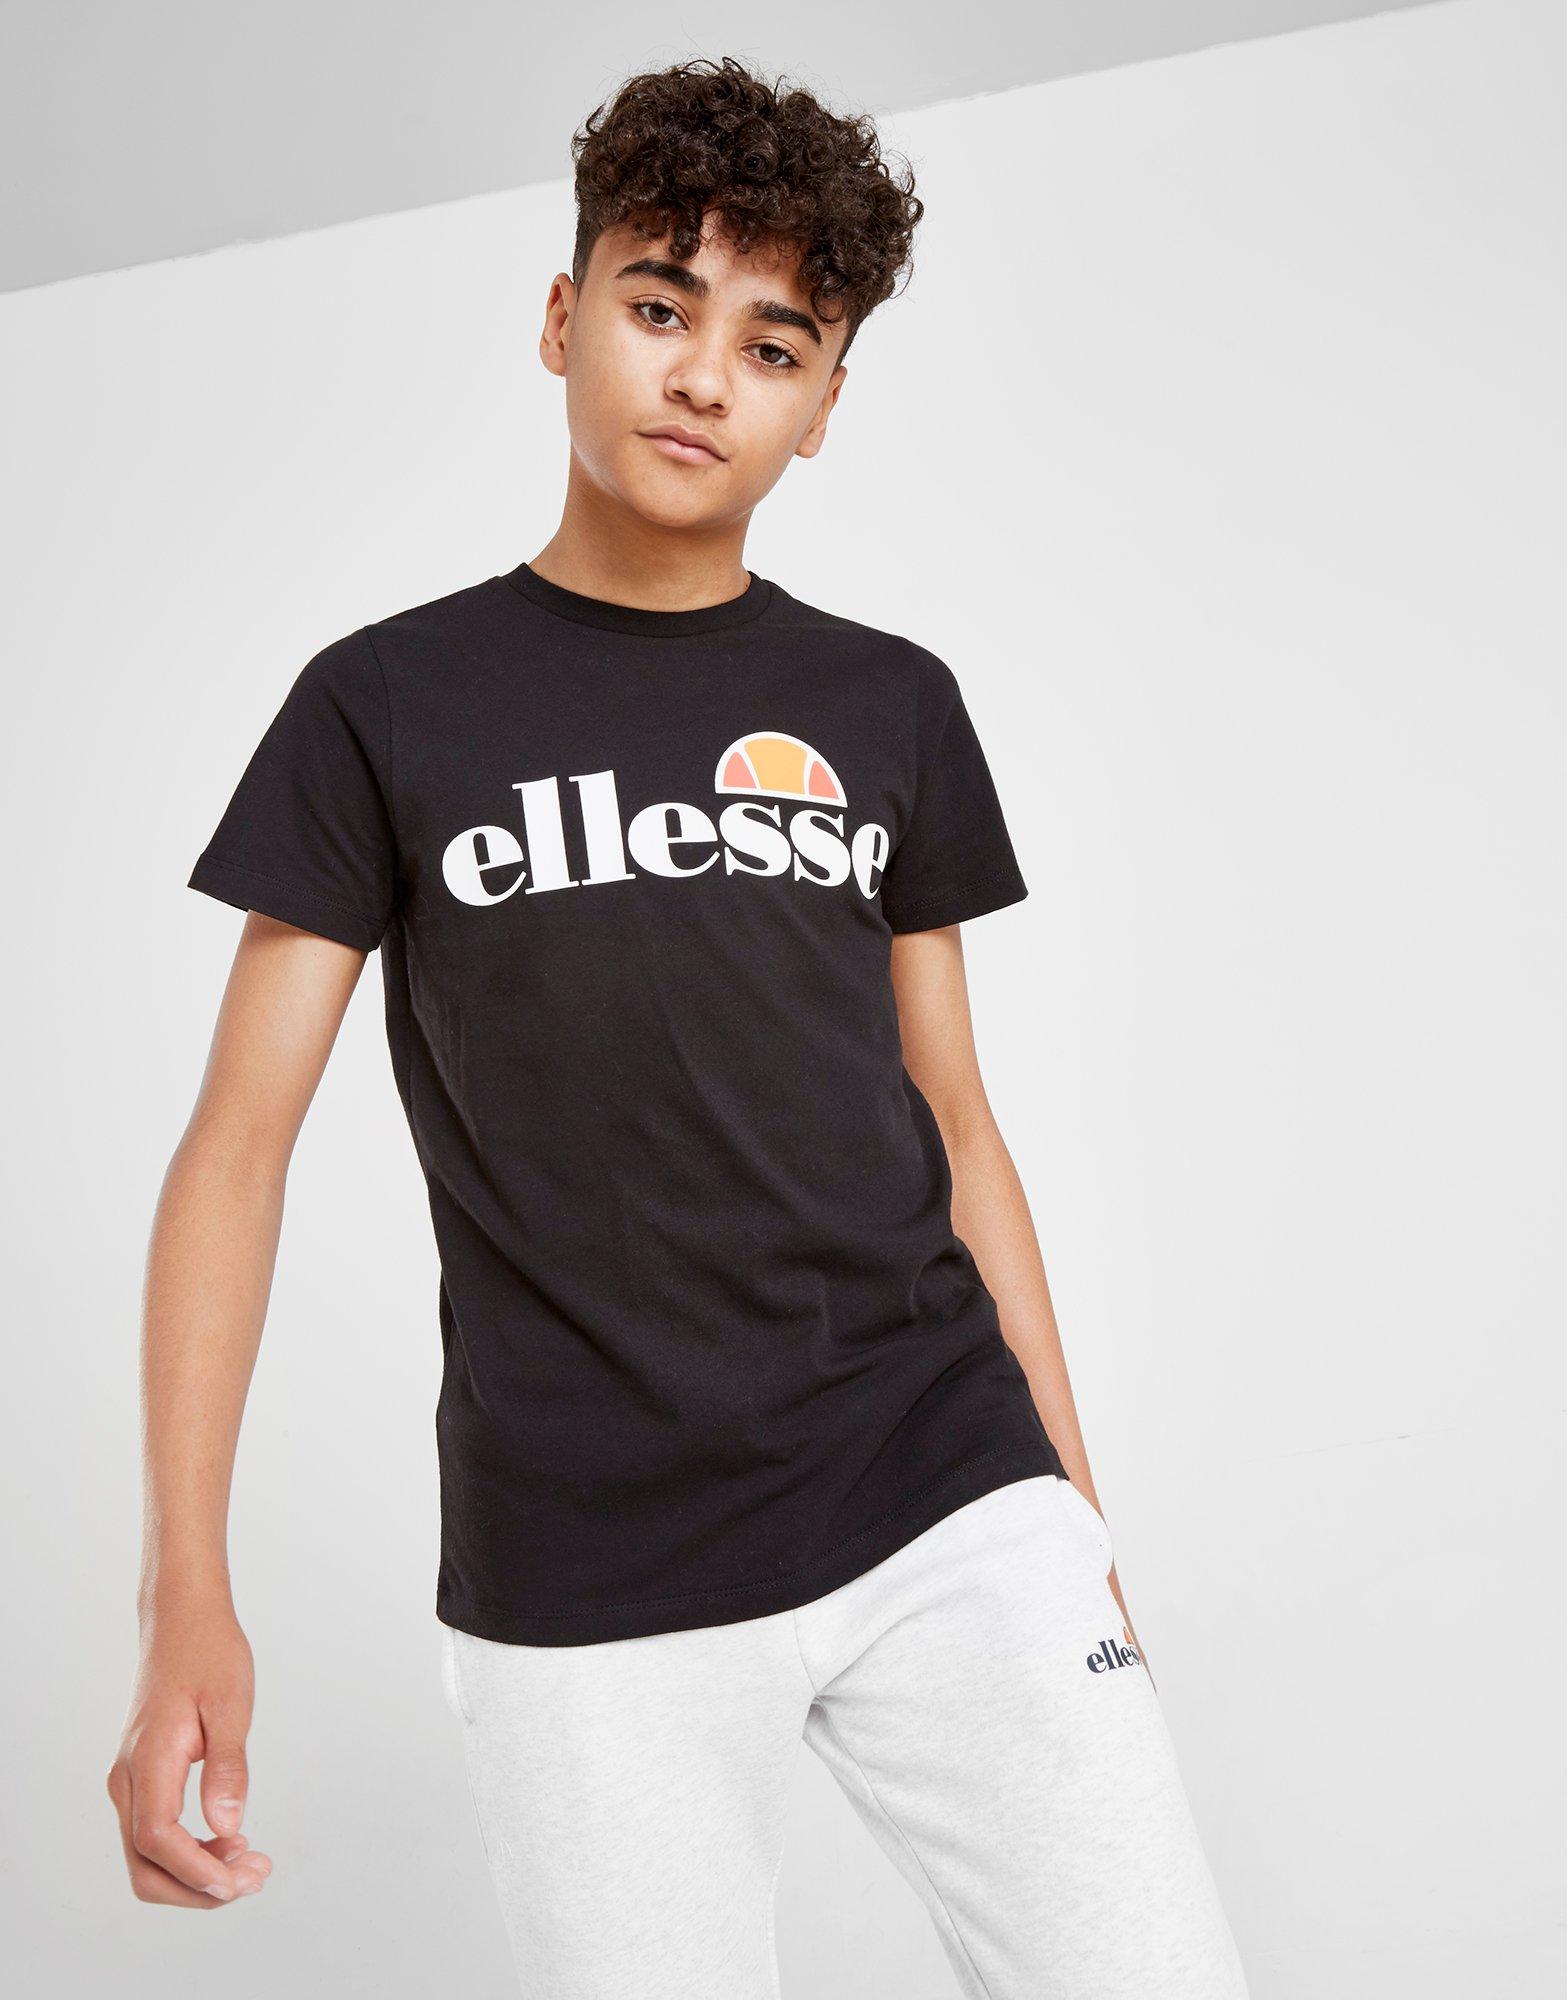 reebok classic t shirt enfant 2015